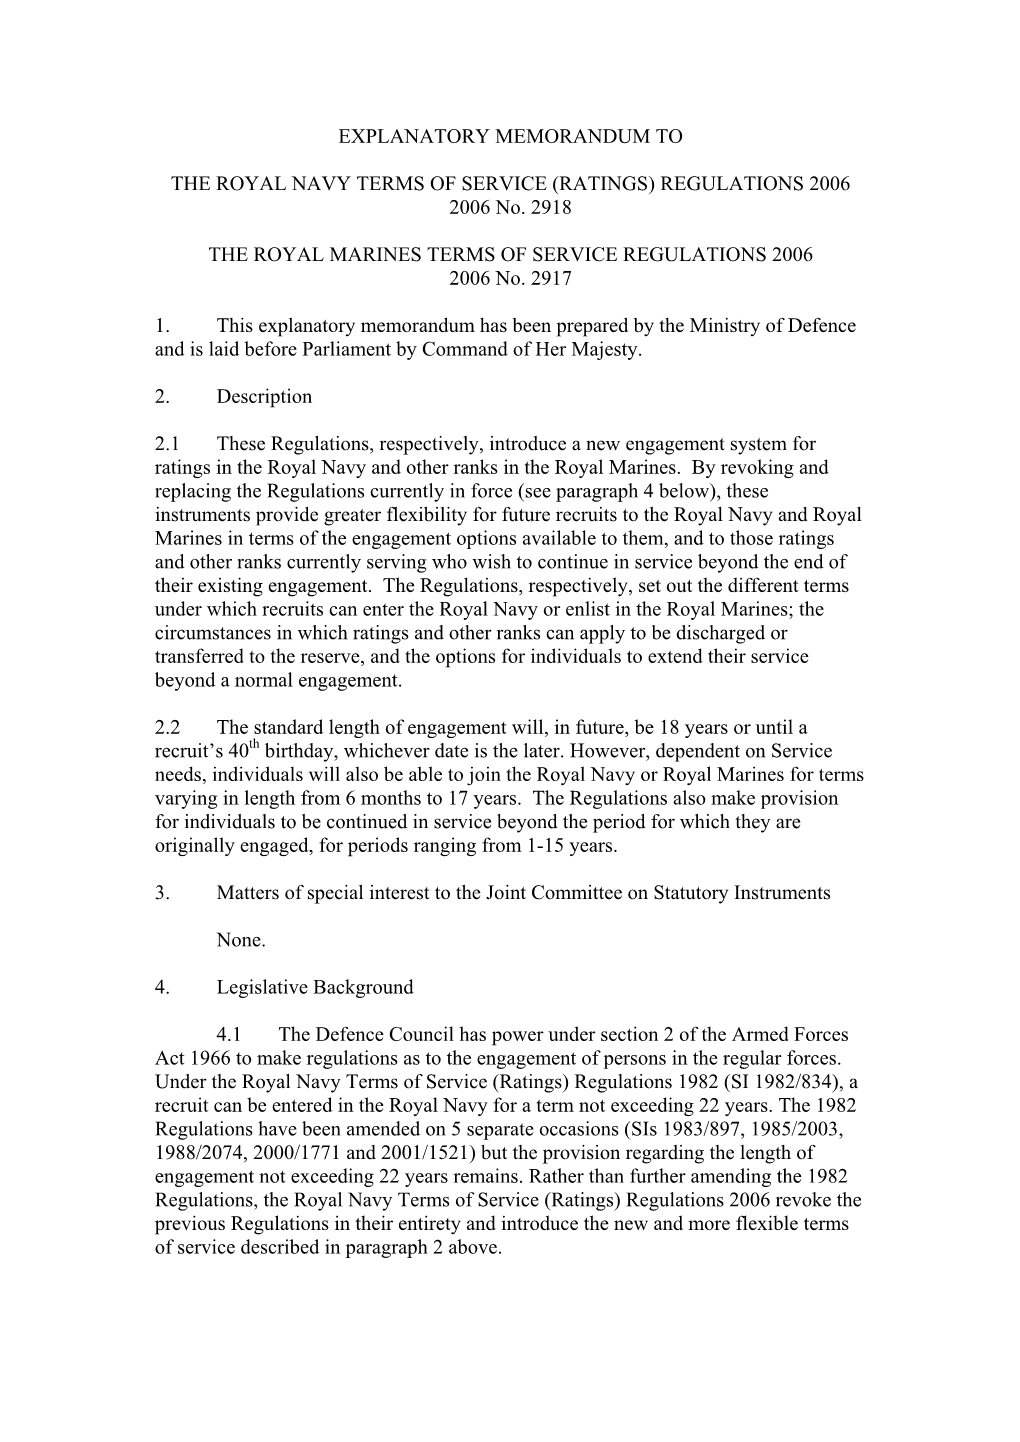 Explanatory Memorandum to the Royal Navy Terms of Service (Ratings) Regulations 2006 No.2918